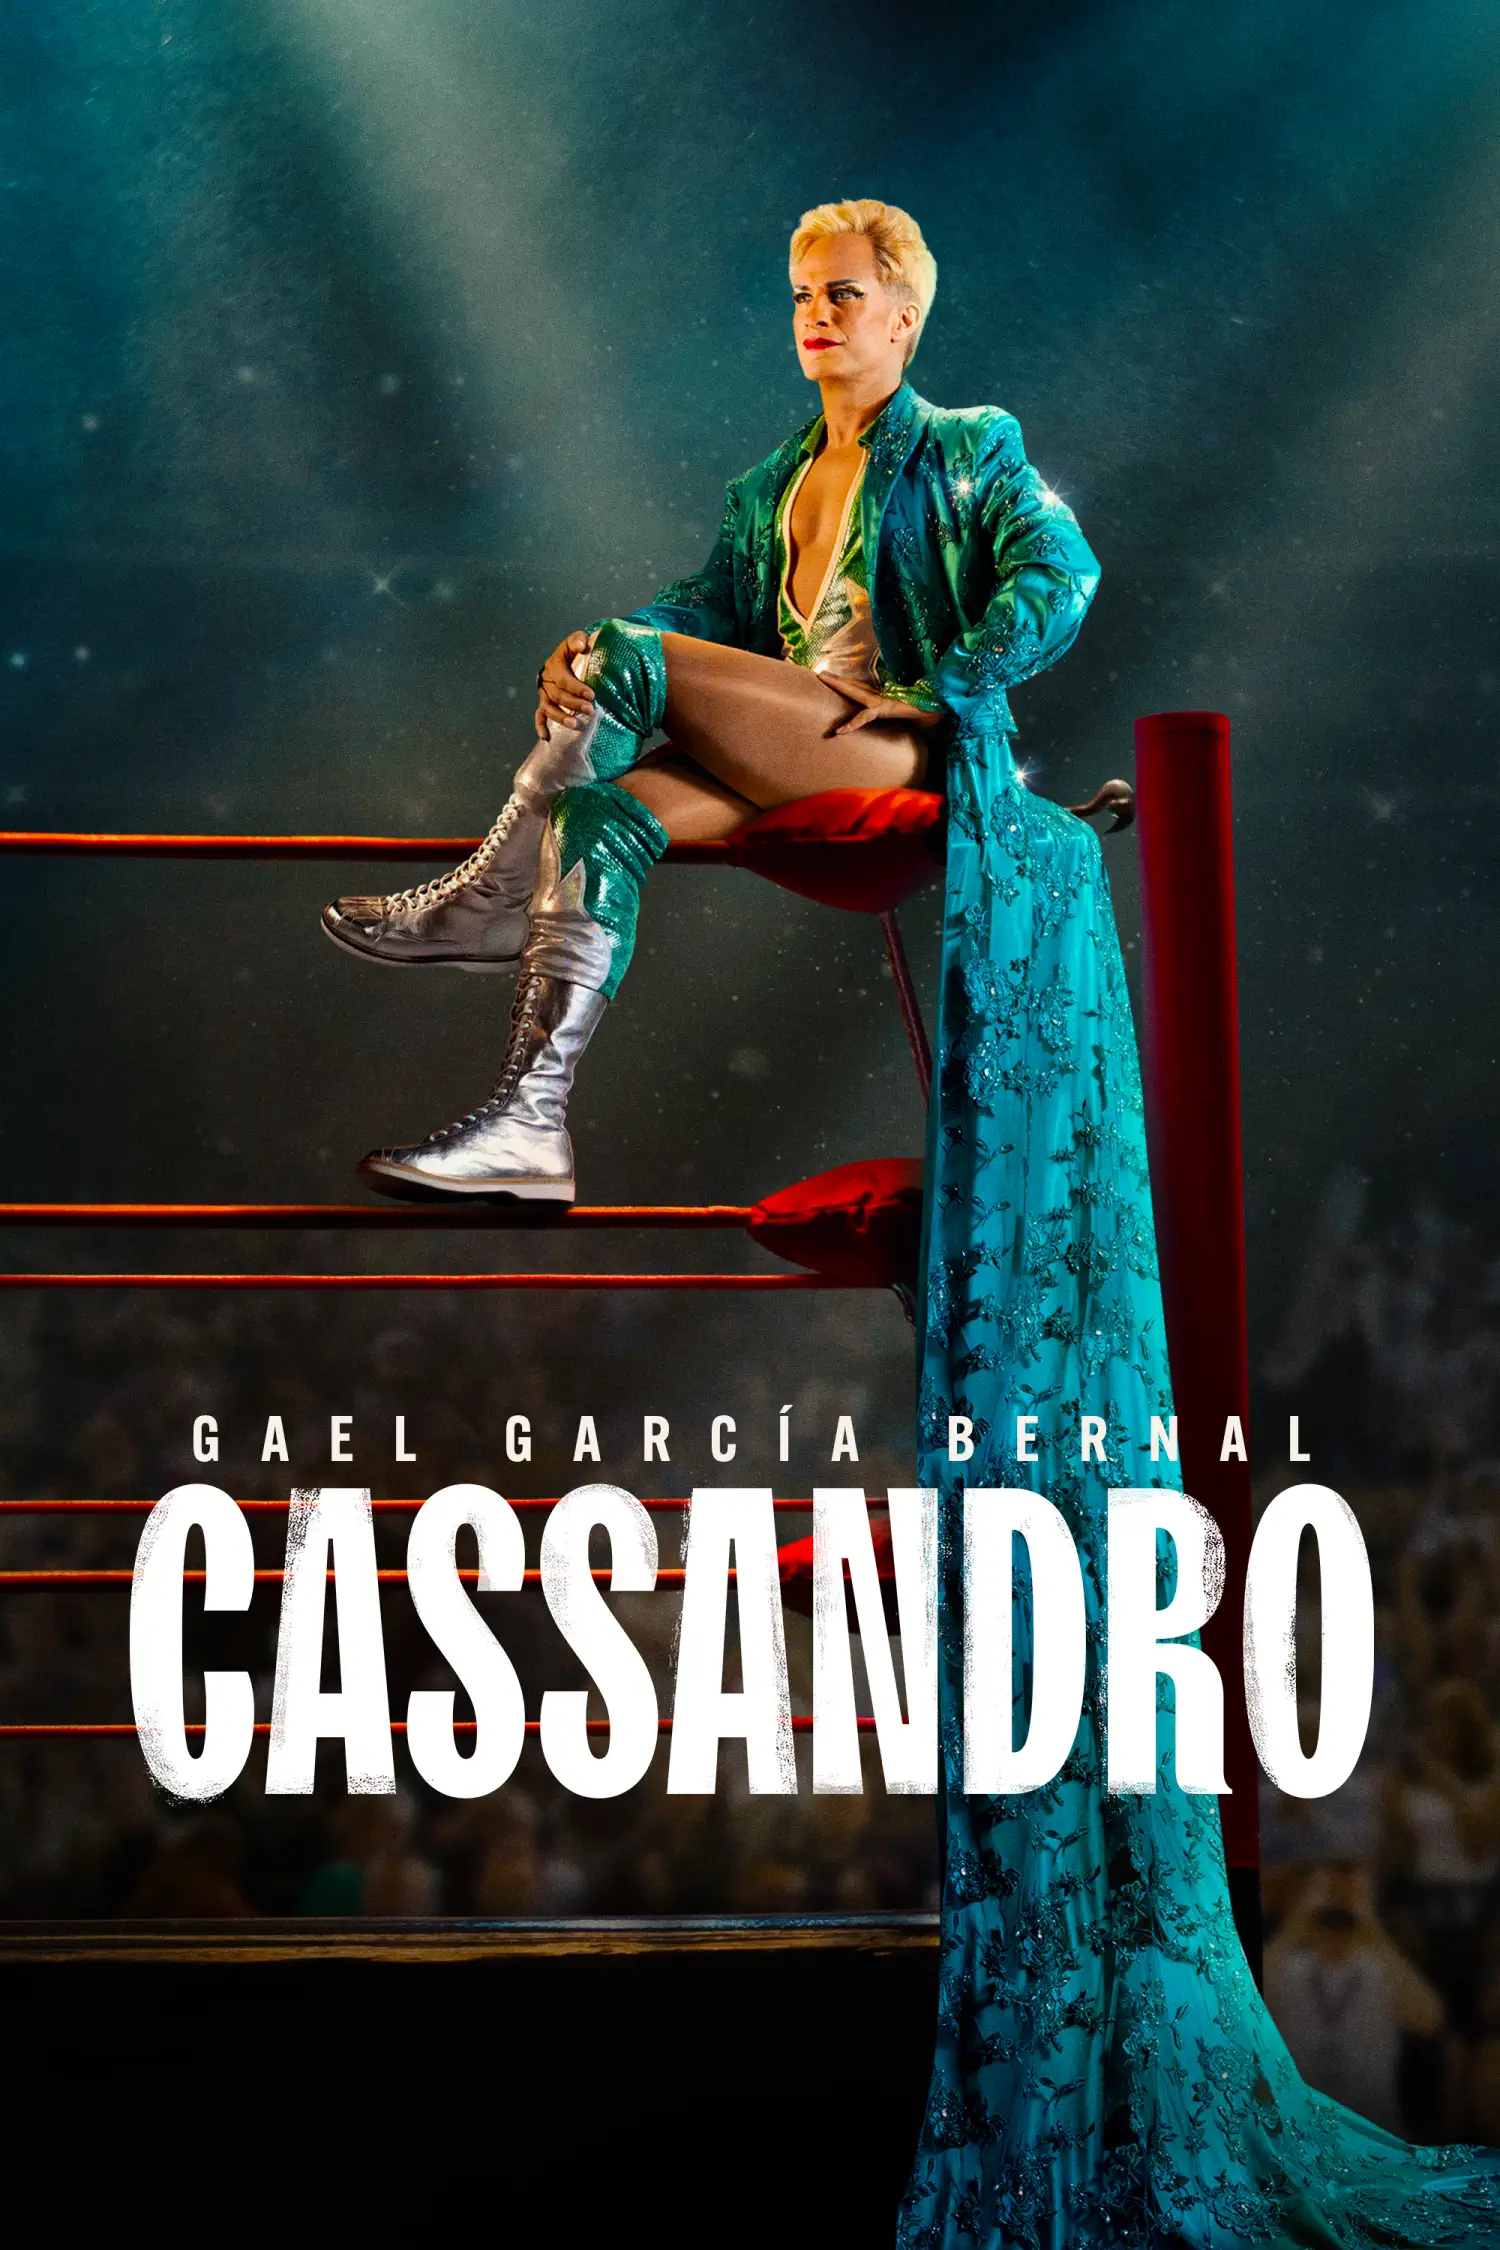 Cassandro [HD] (2023)